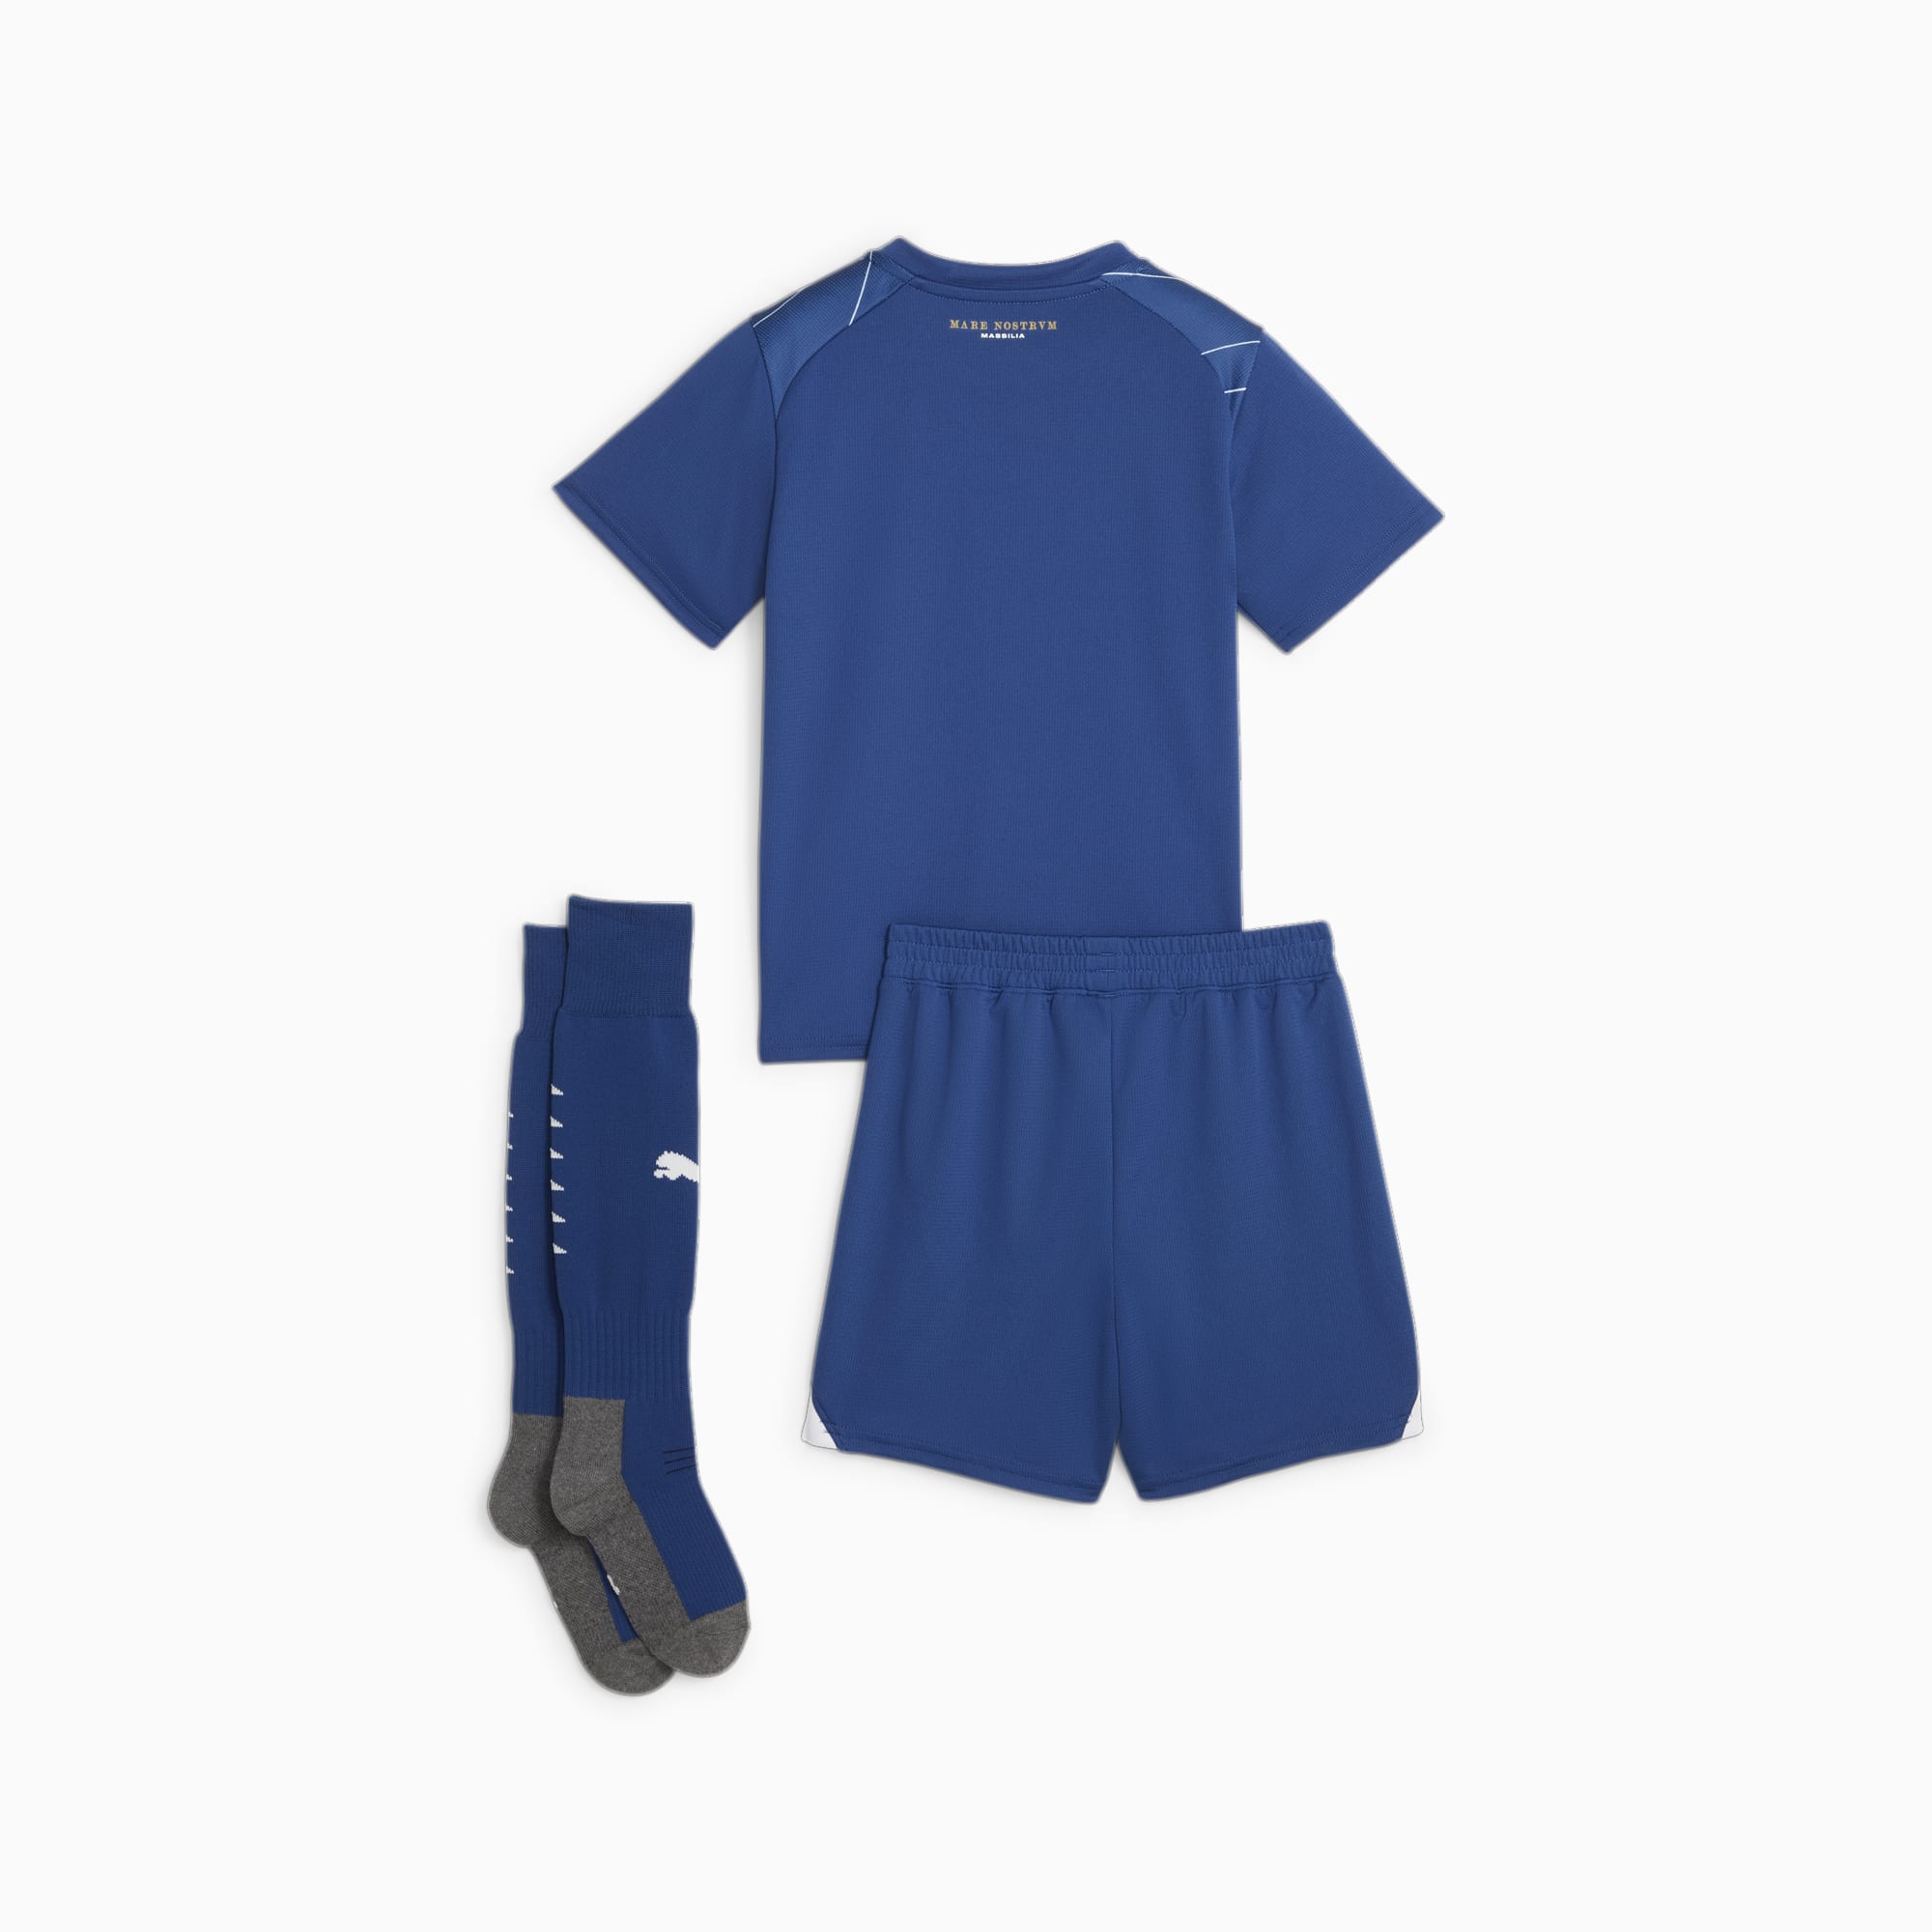 PUMA Olympique De Marseille 23/24 Away Minikit, Royal Blue, Size 98, Clothing